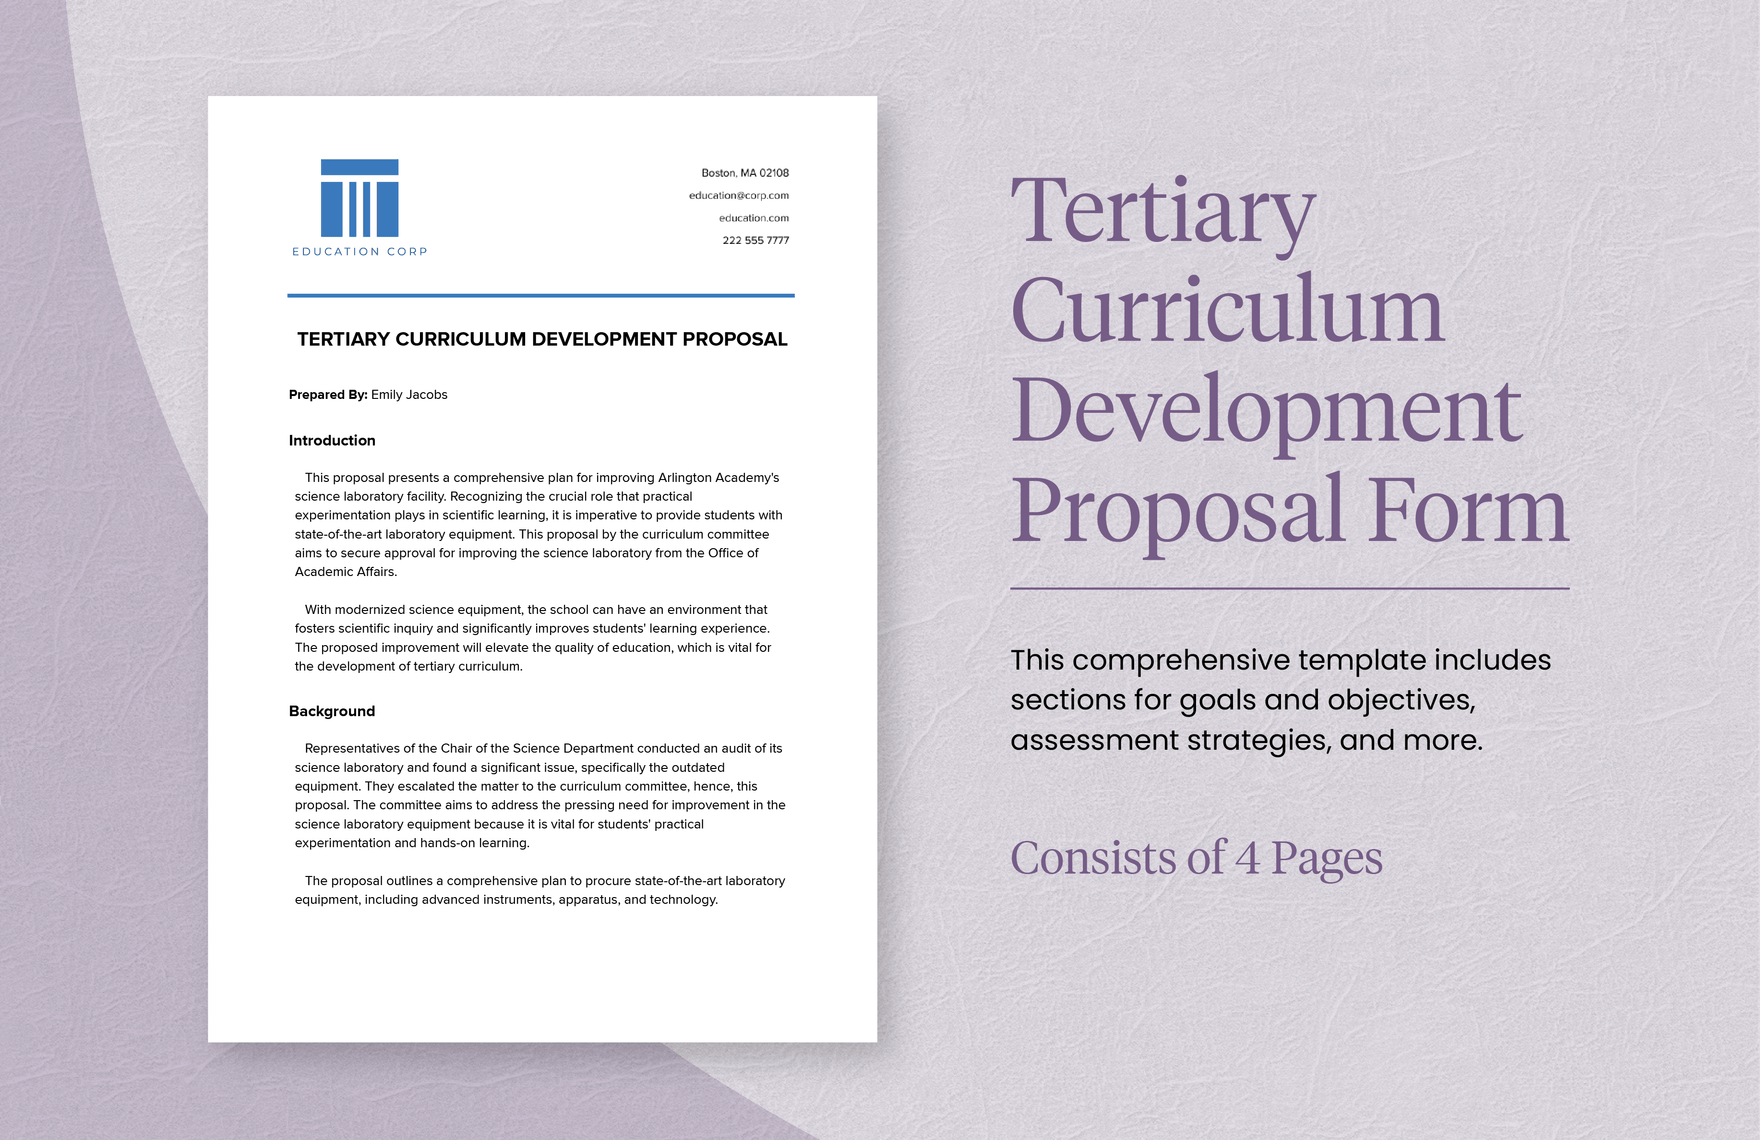 Tertiary Curriculum Development Proposal Form in Word, Google Docs